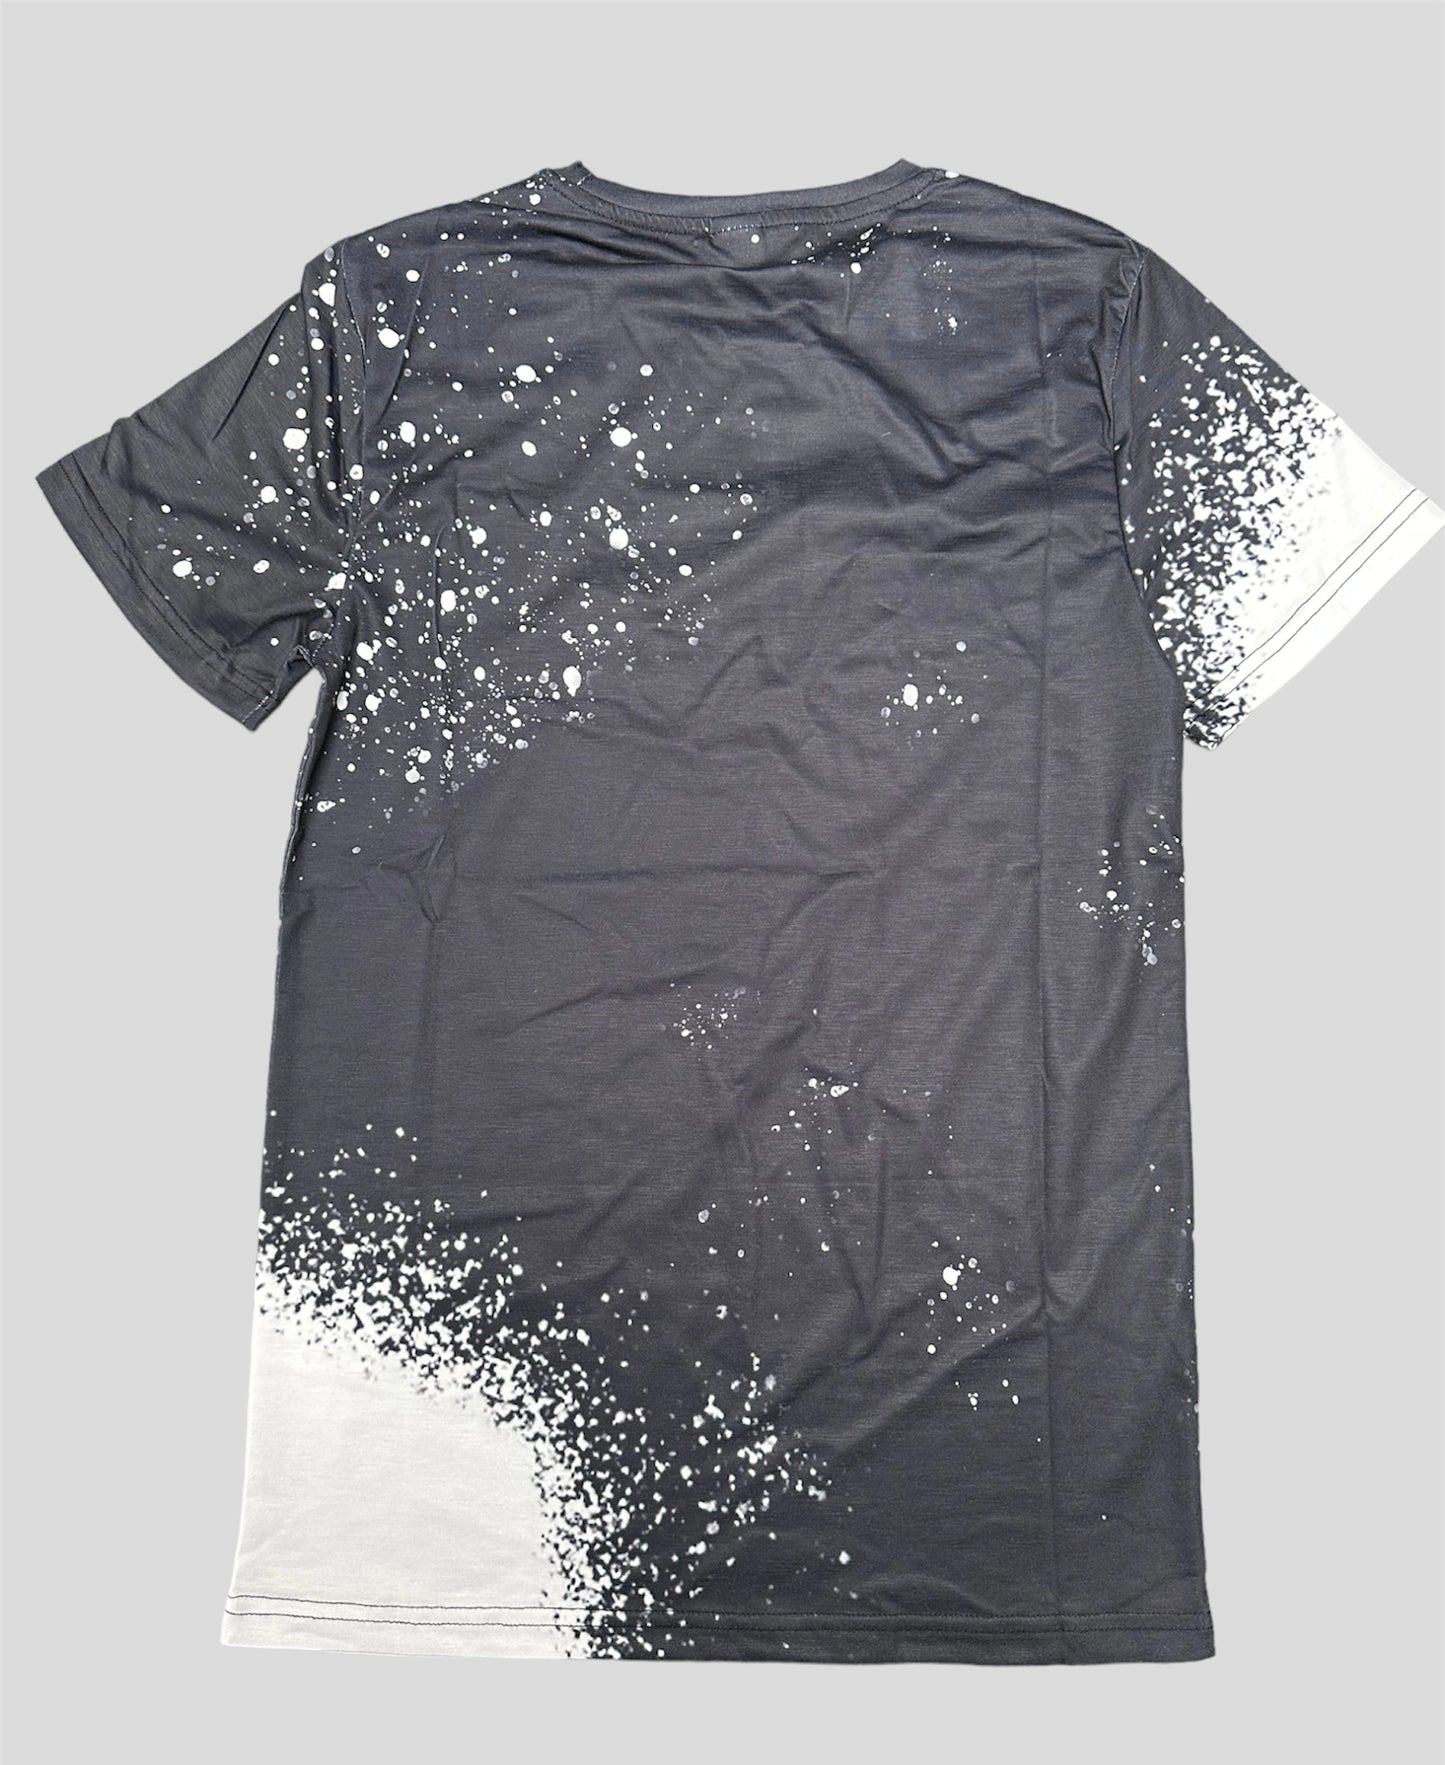 Blanks Spots Faux Bleached Adult Unisex Shirts